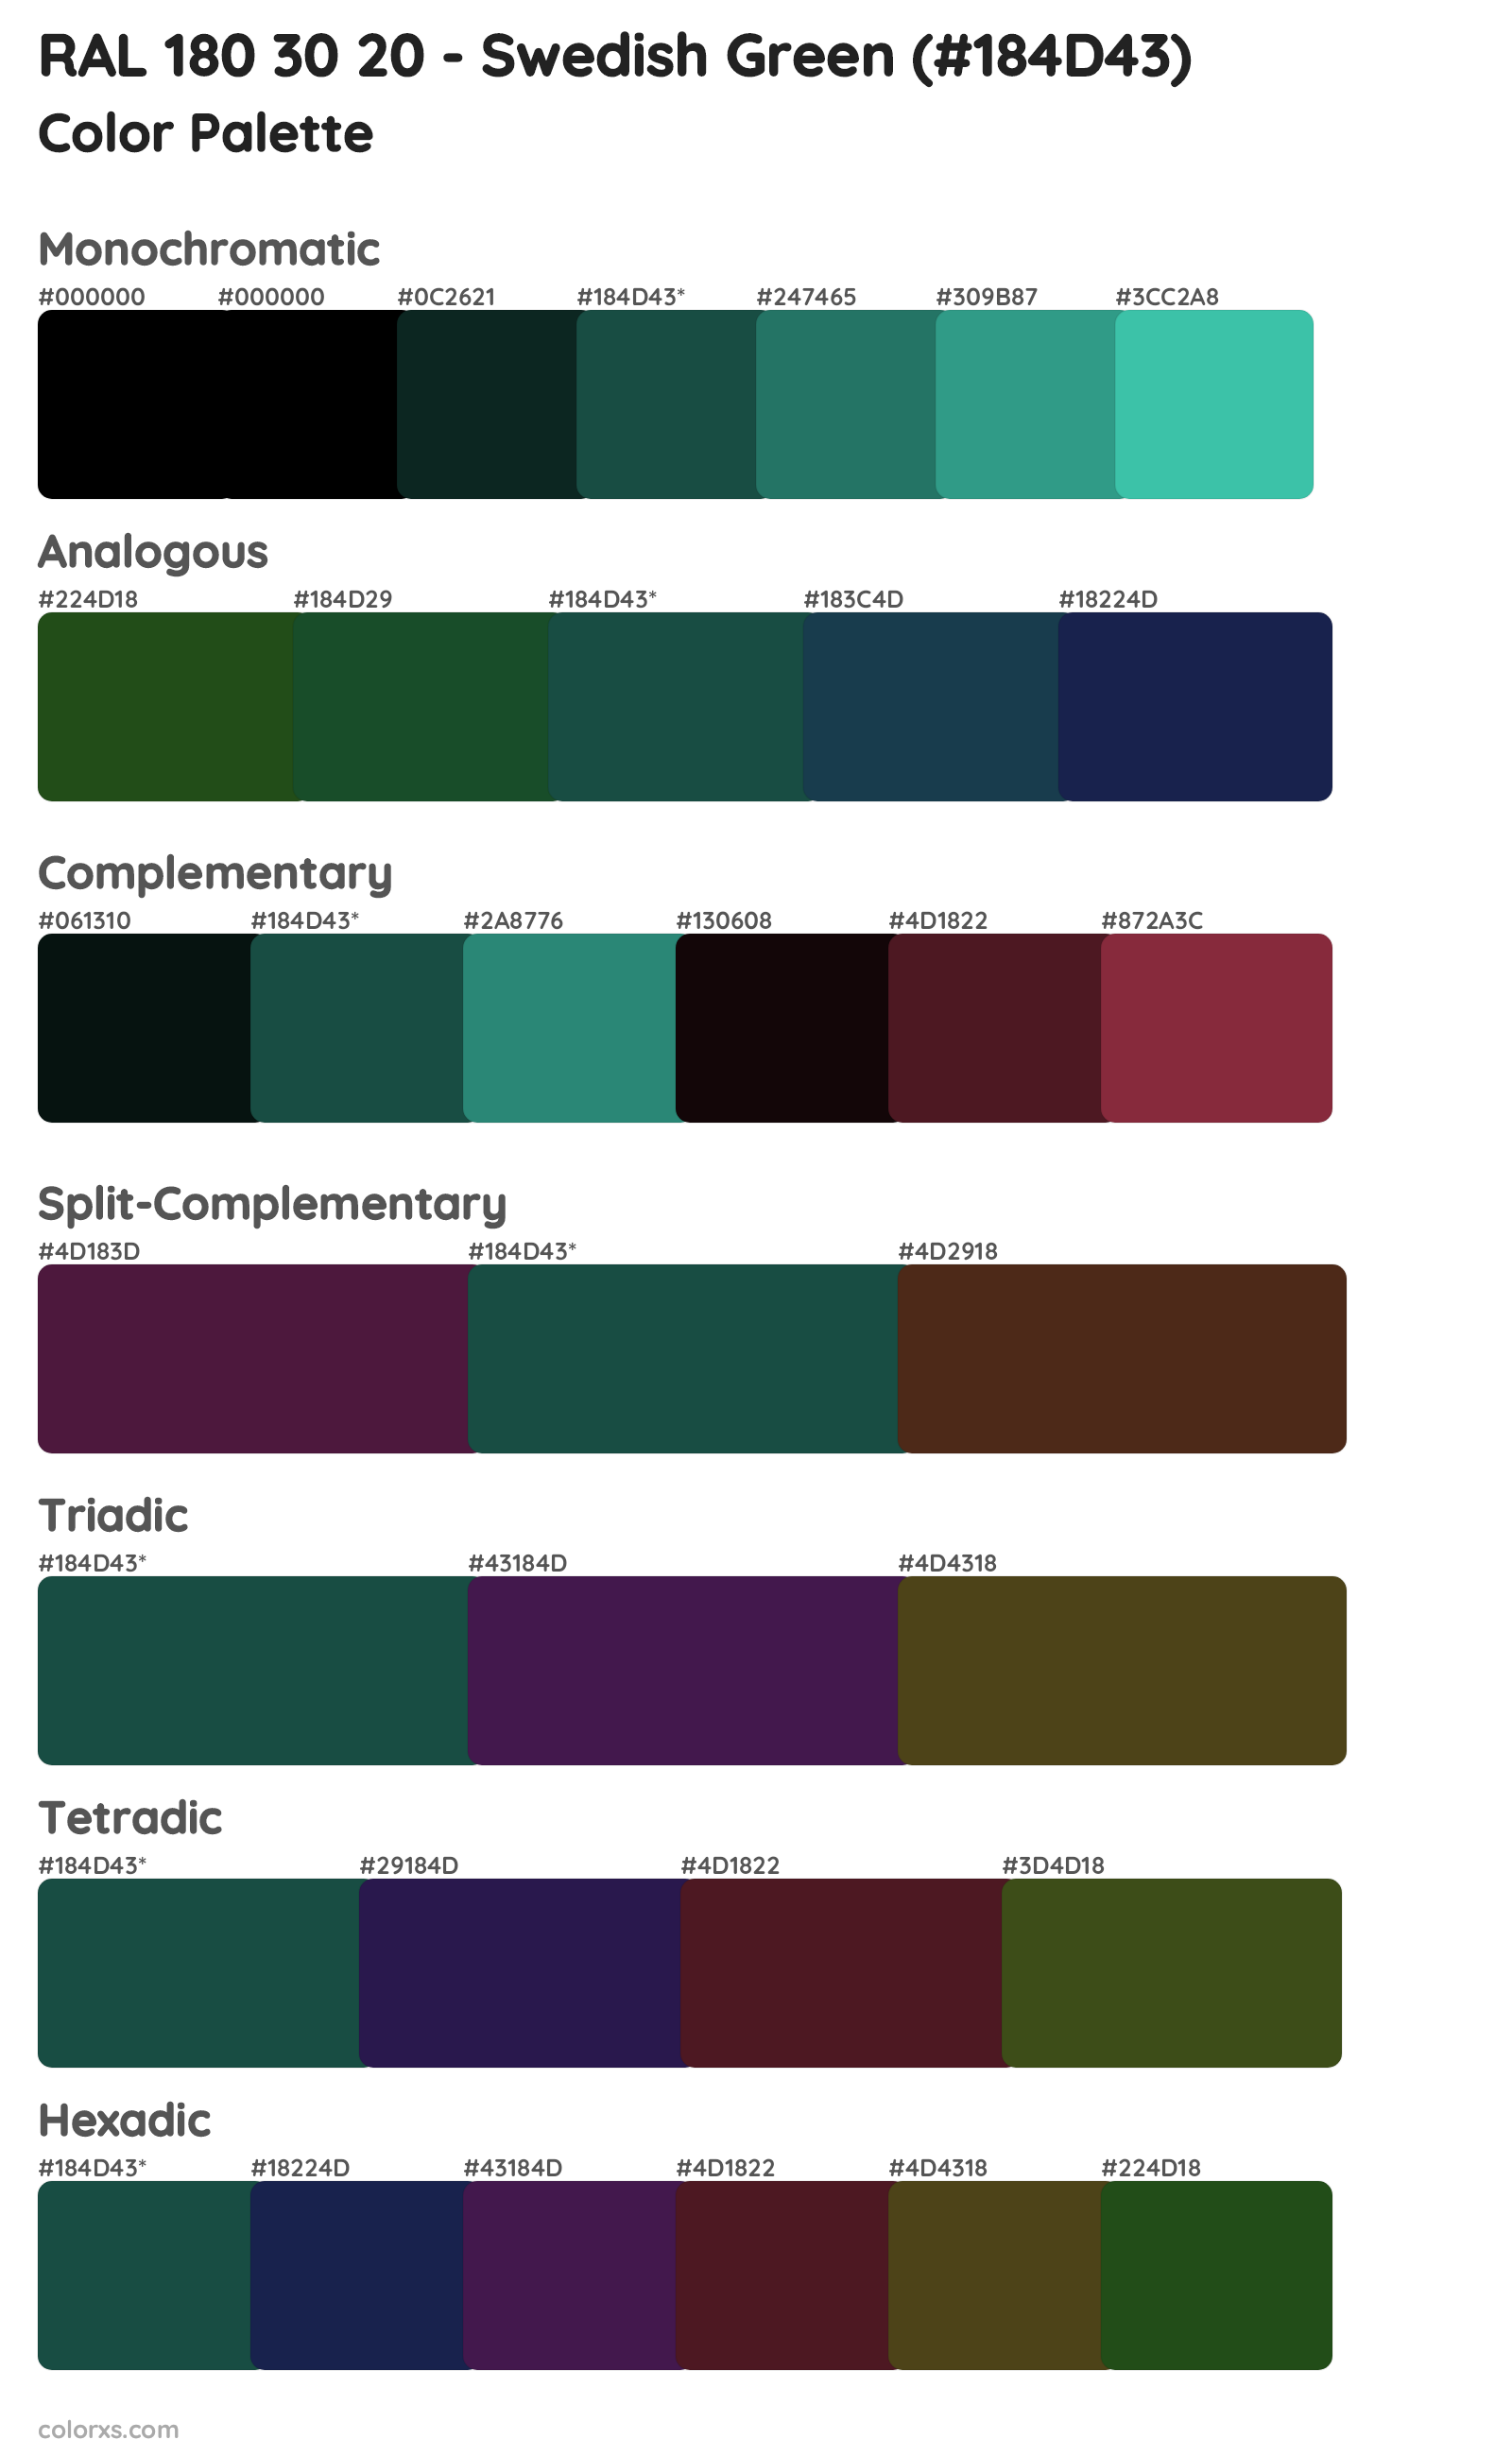 RAL 180 30 20 - Swedish Green Color Scheme Palettes